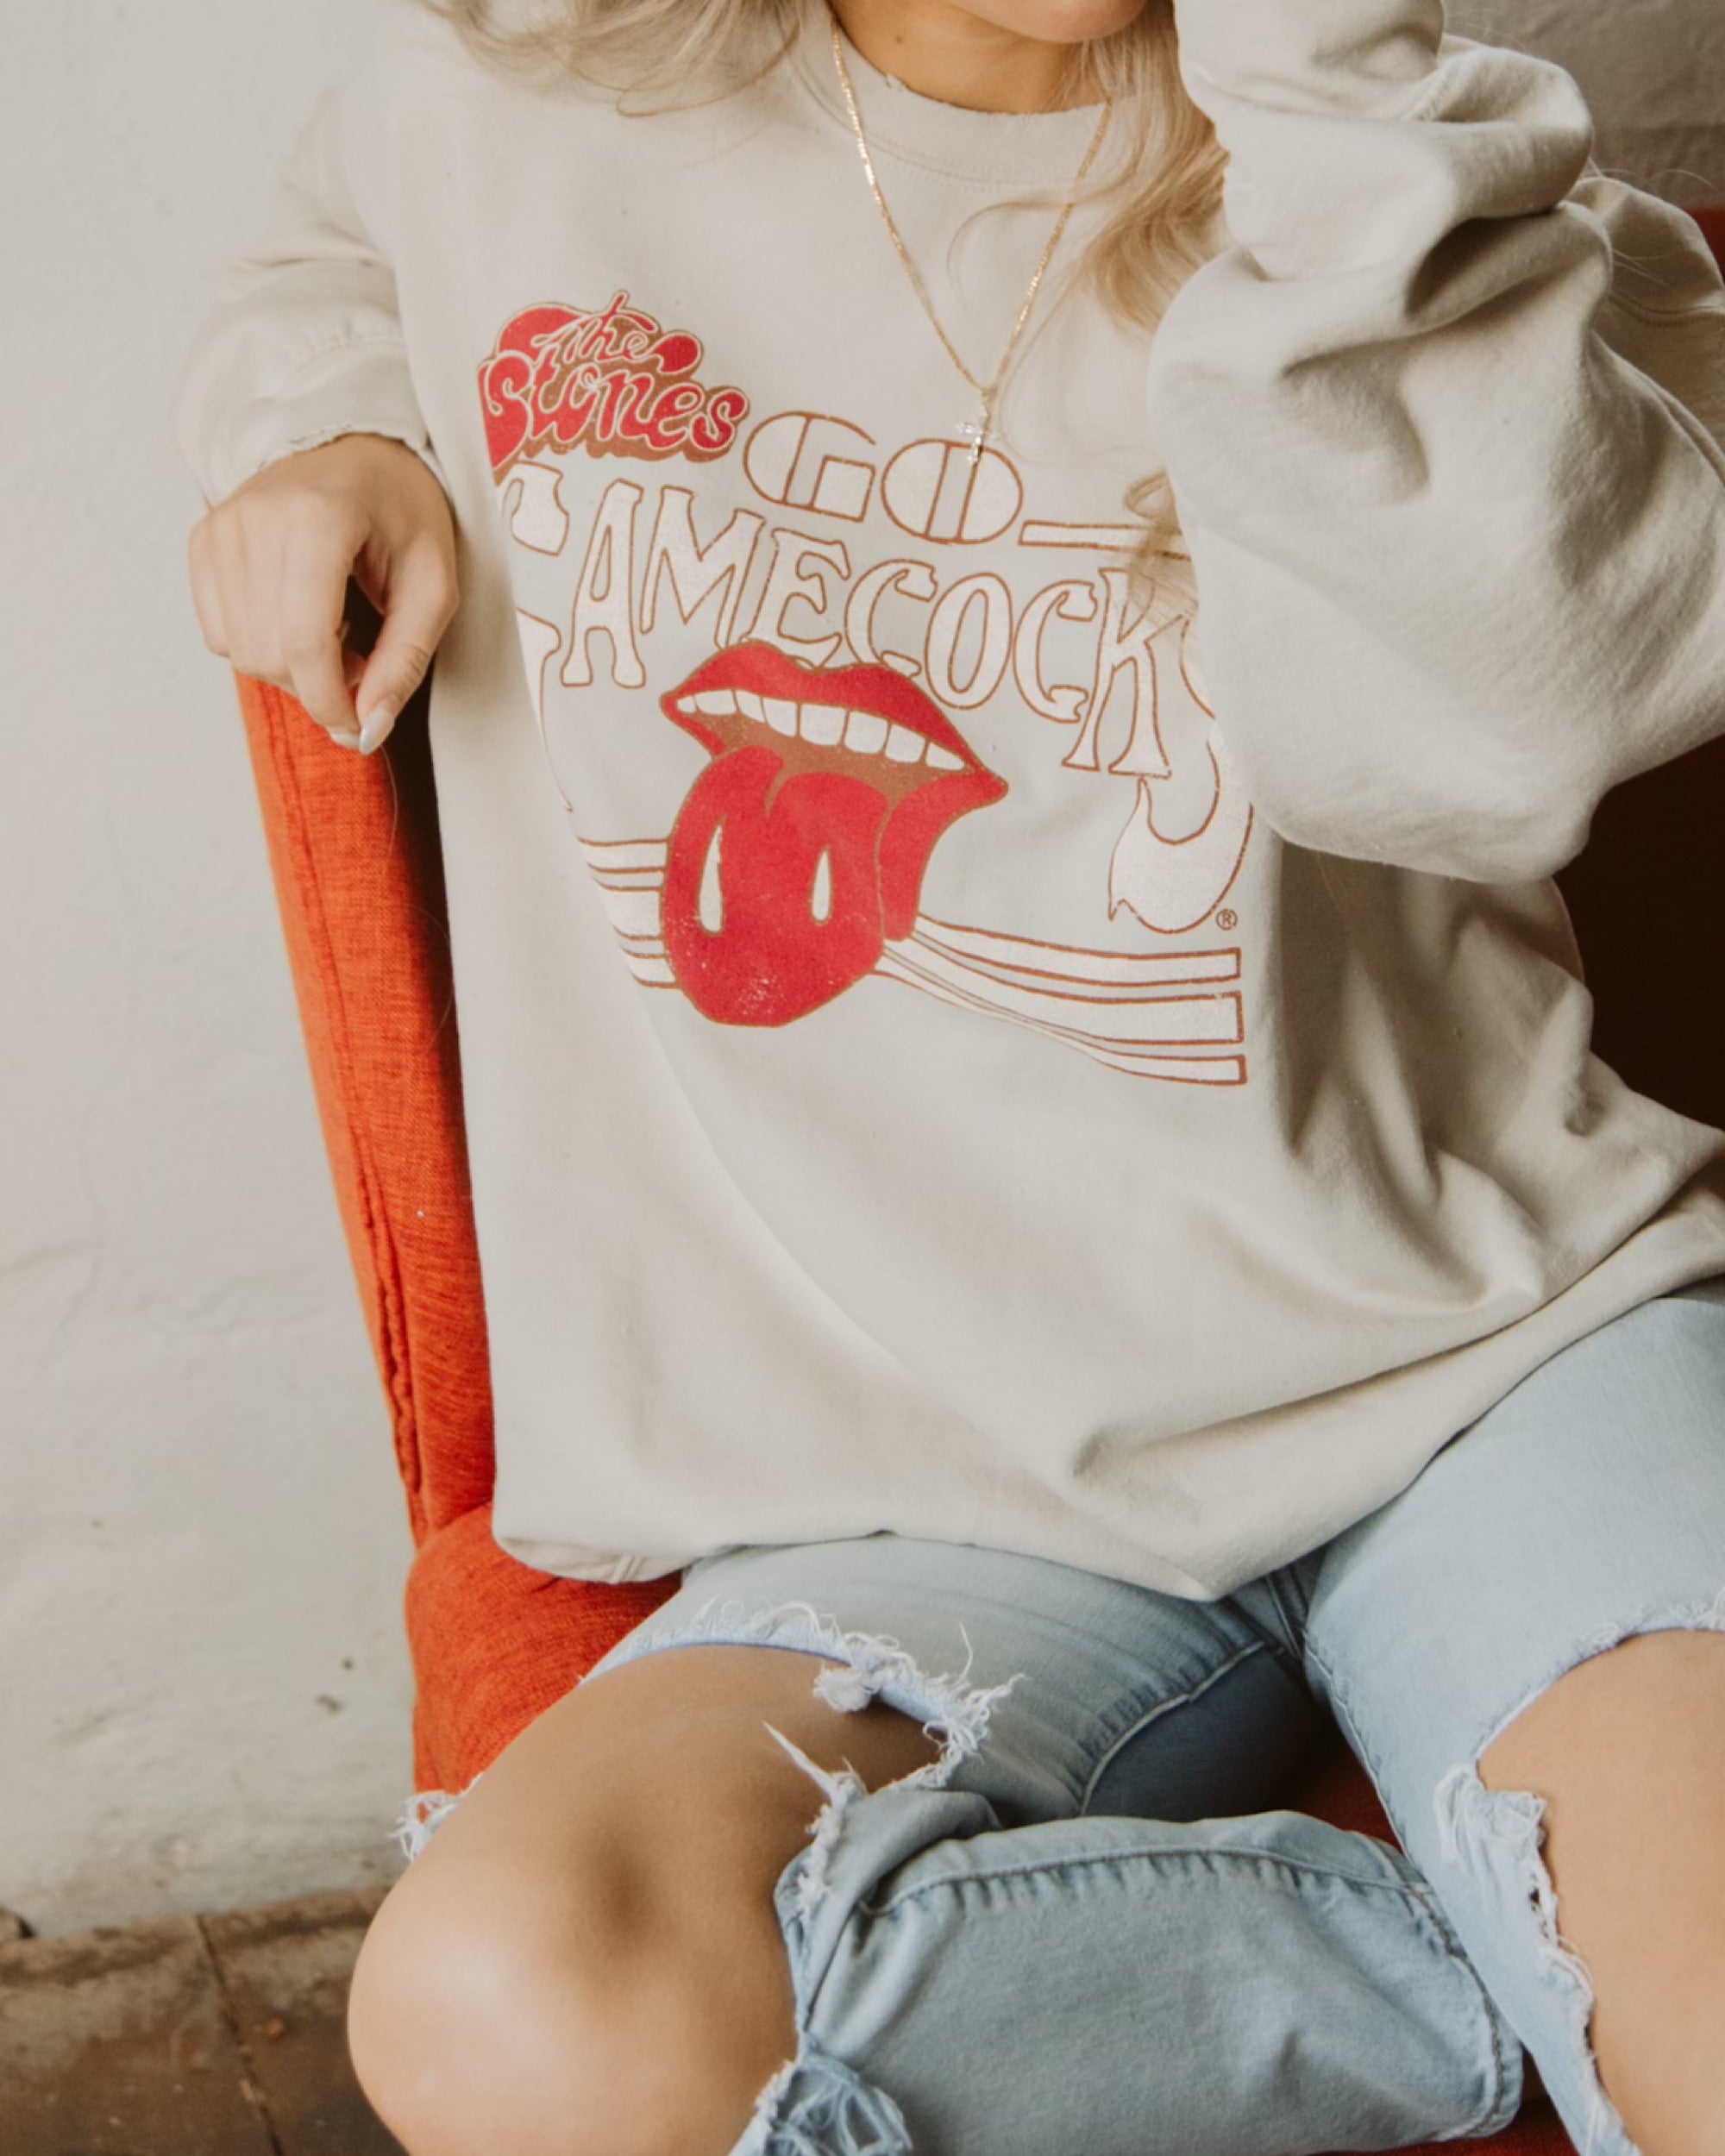 Rolling Stones Gamecocks Stoned Sand Thrifted Sweatshirt - shoplivylu